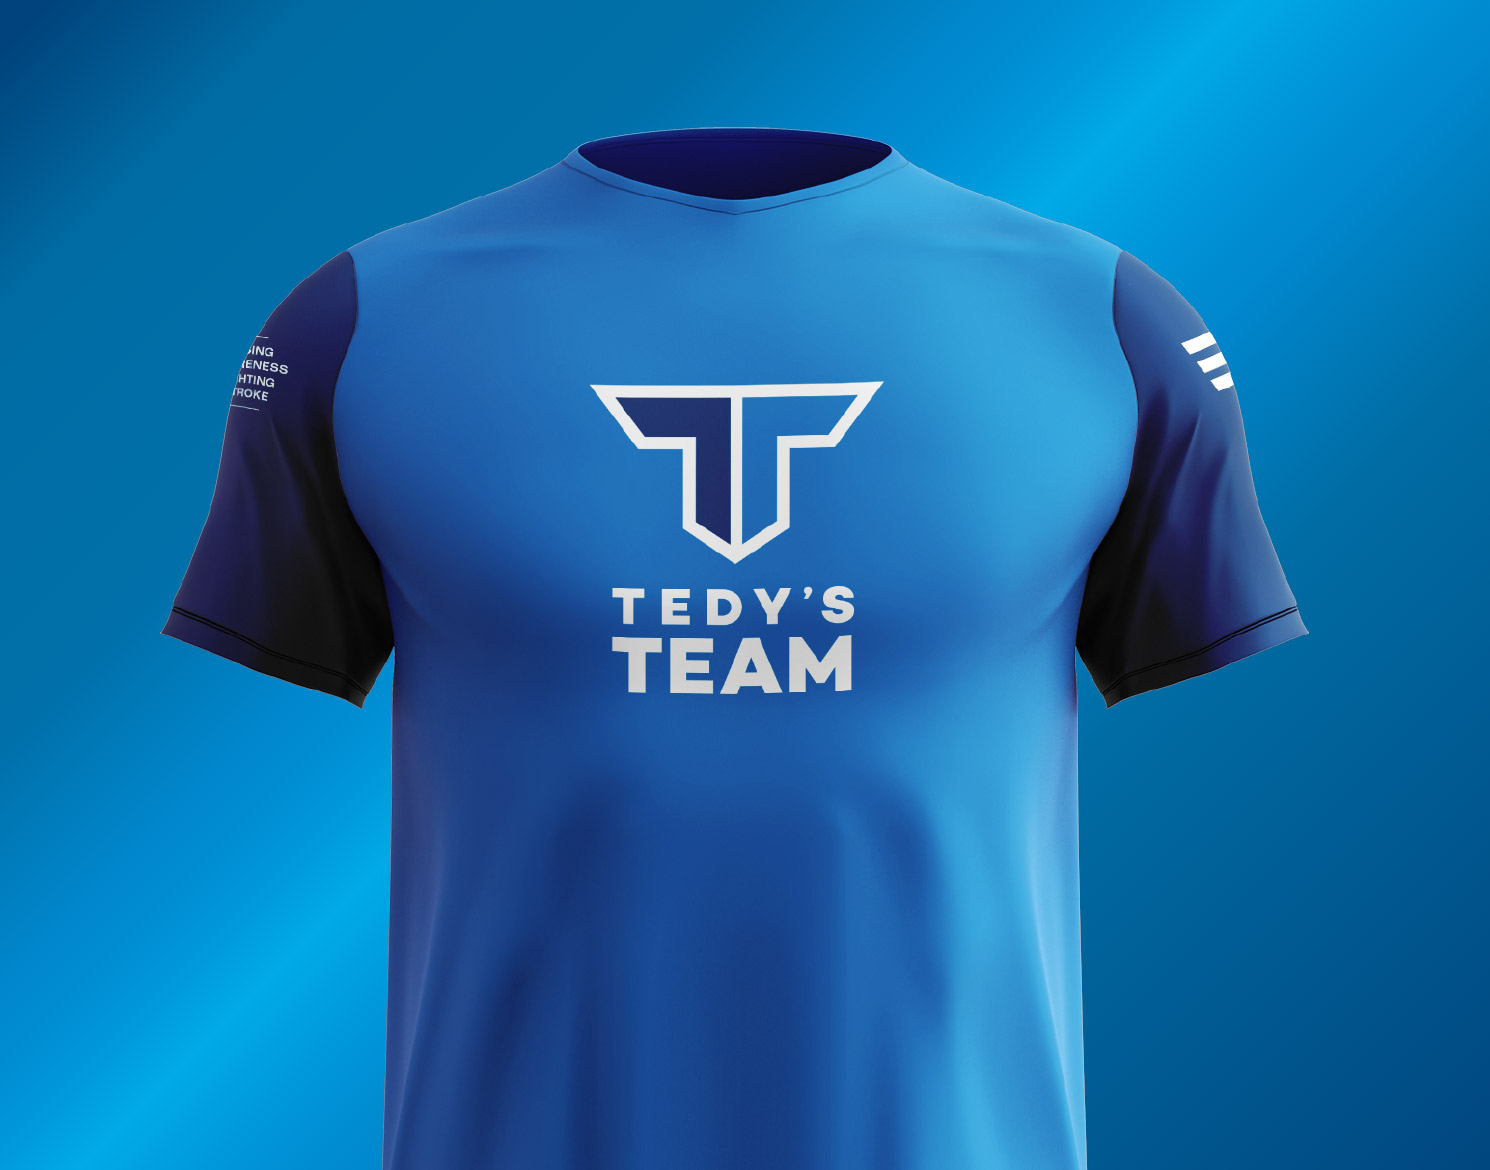 Jackrabbit philanthropy example for Tedy's Team: Logo design shown on shirt